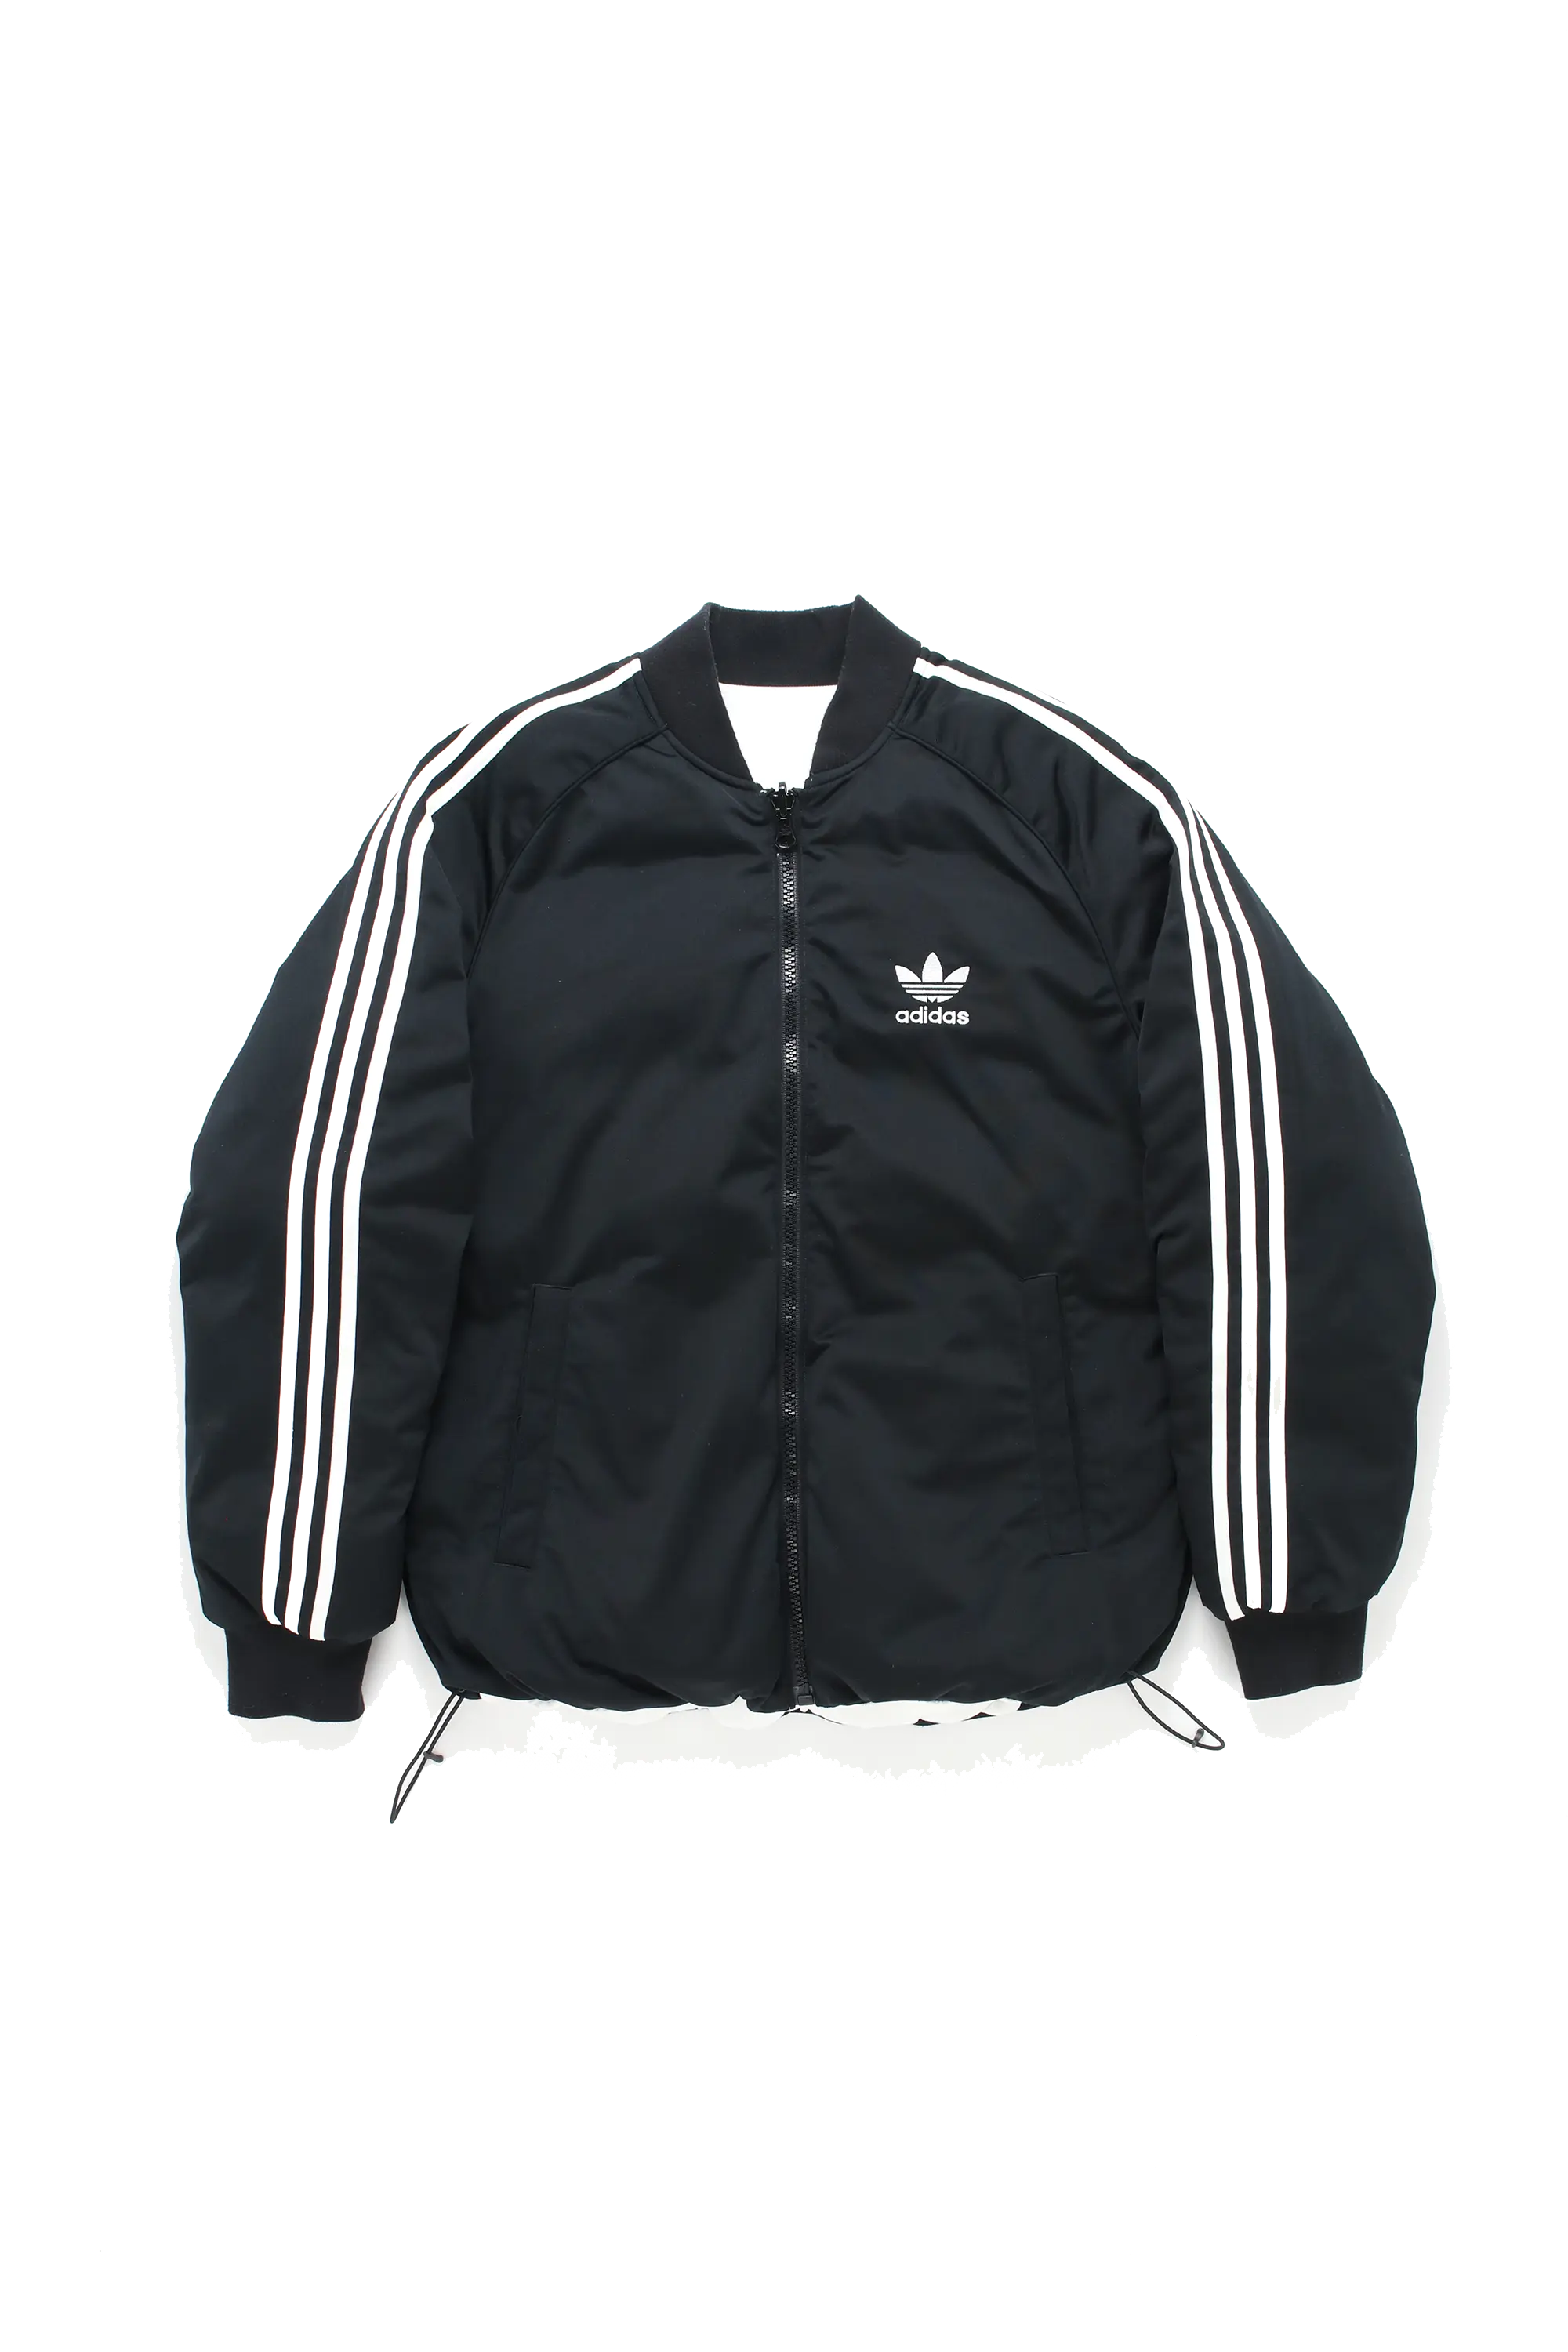 Adidas Reversible Sample Jacket